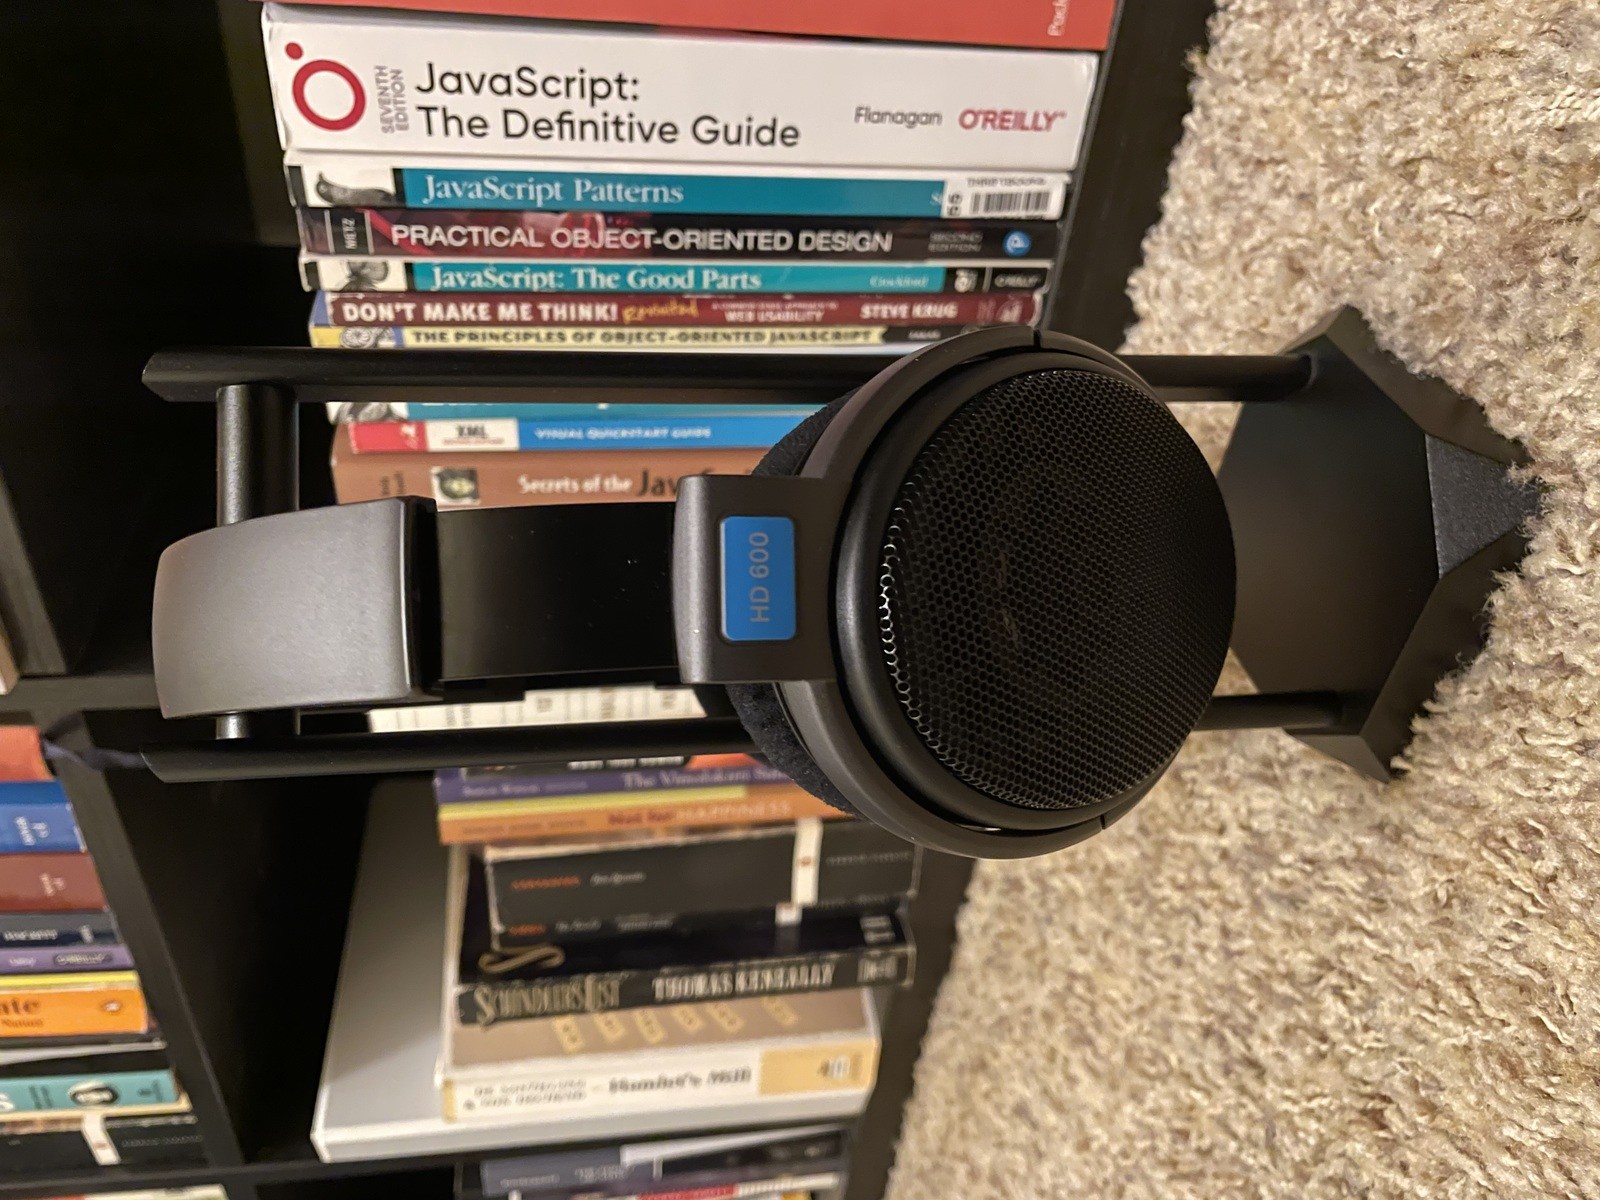 HD 600 next to a bookshelf at an angle